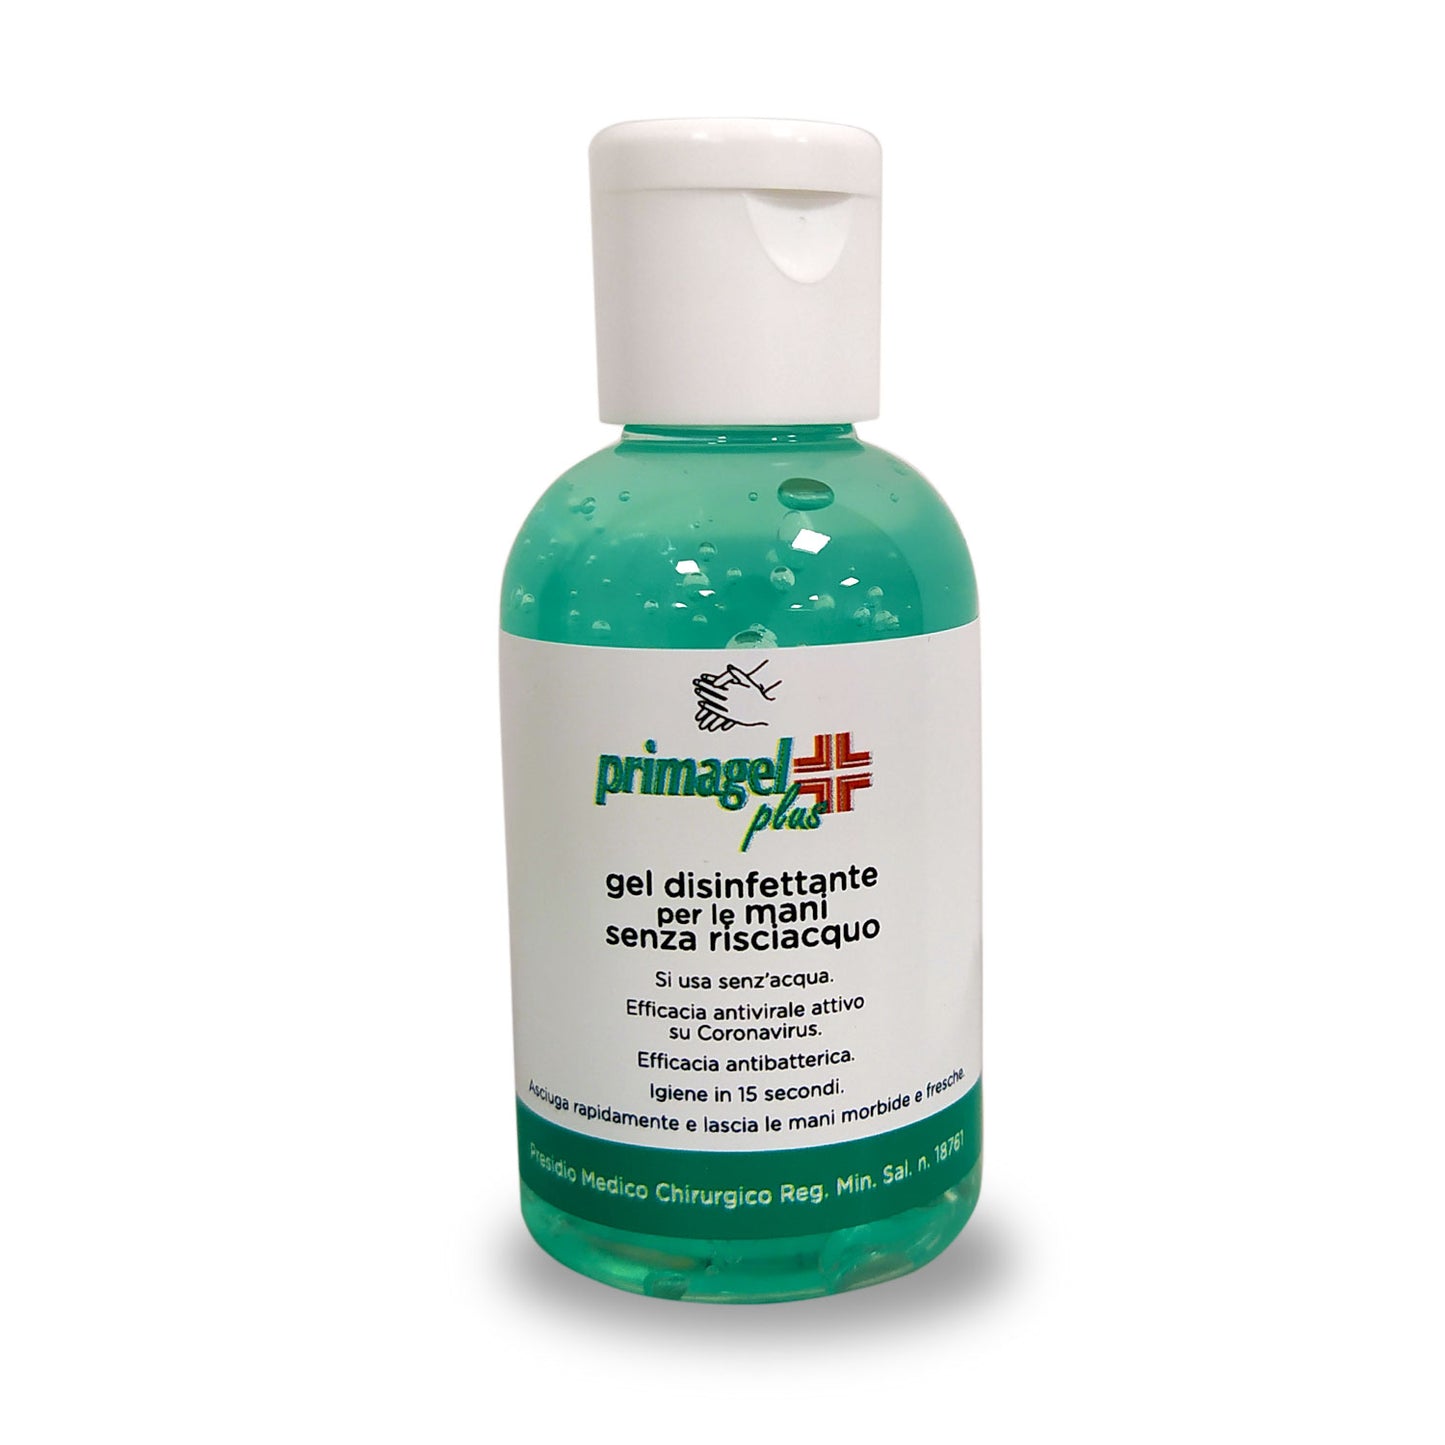 Primagel Plus - Hand Disinfectant Gel 50ml vial format